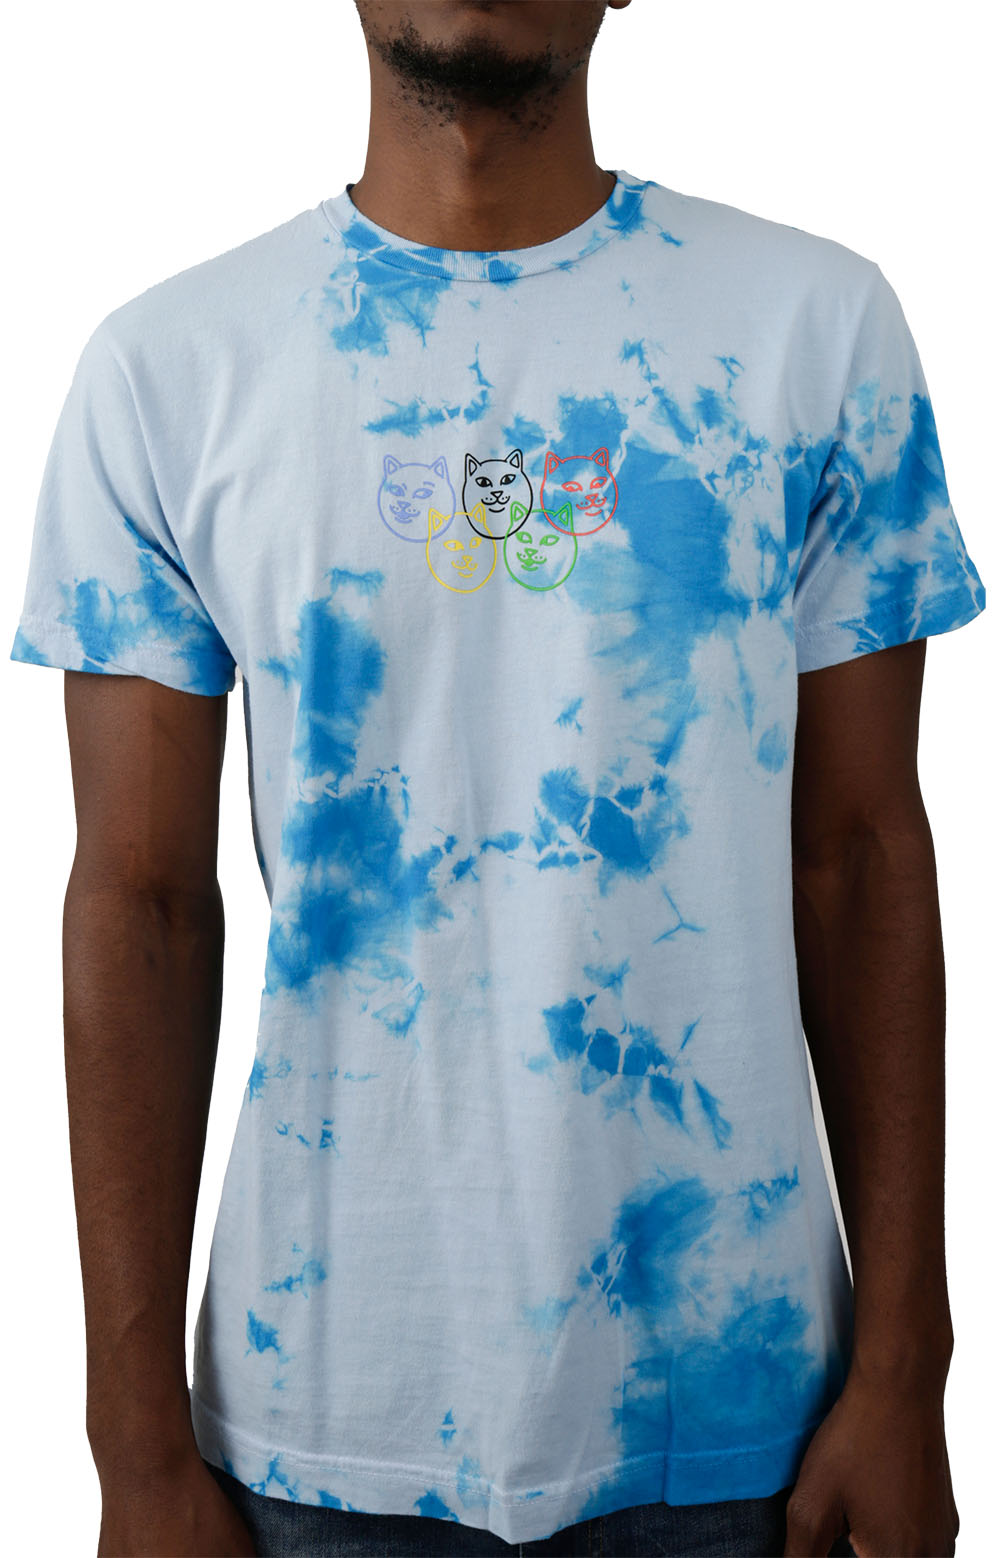 Winners Circle T-Shirt - Powder Blue Cloud Wash